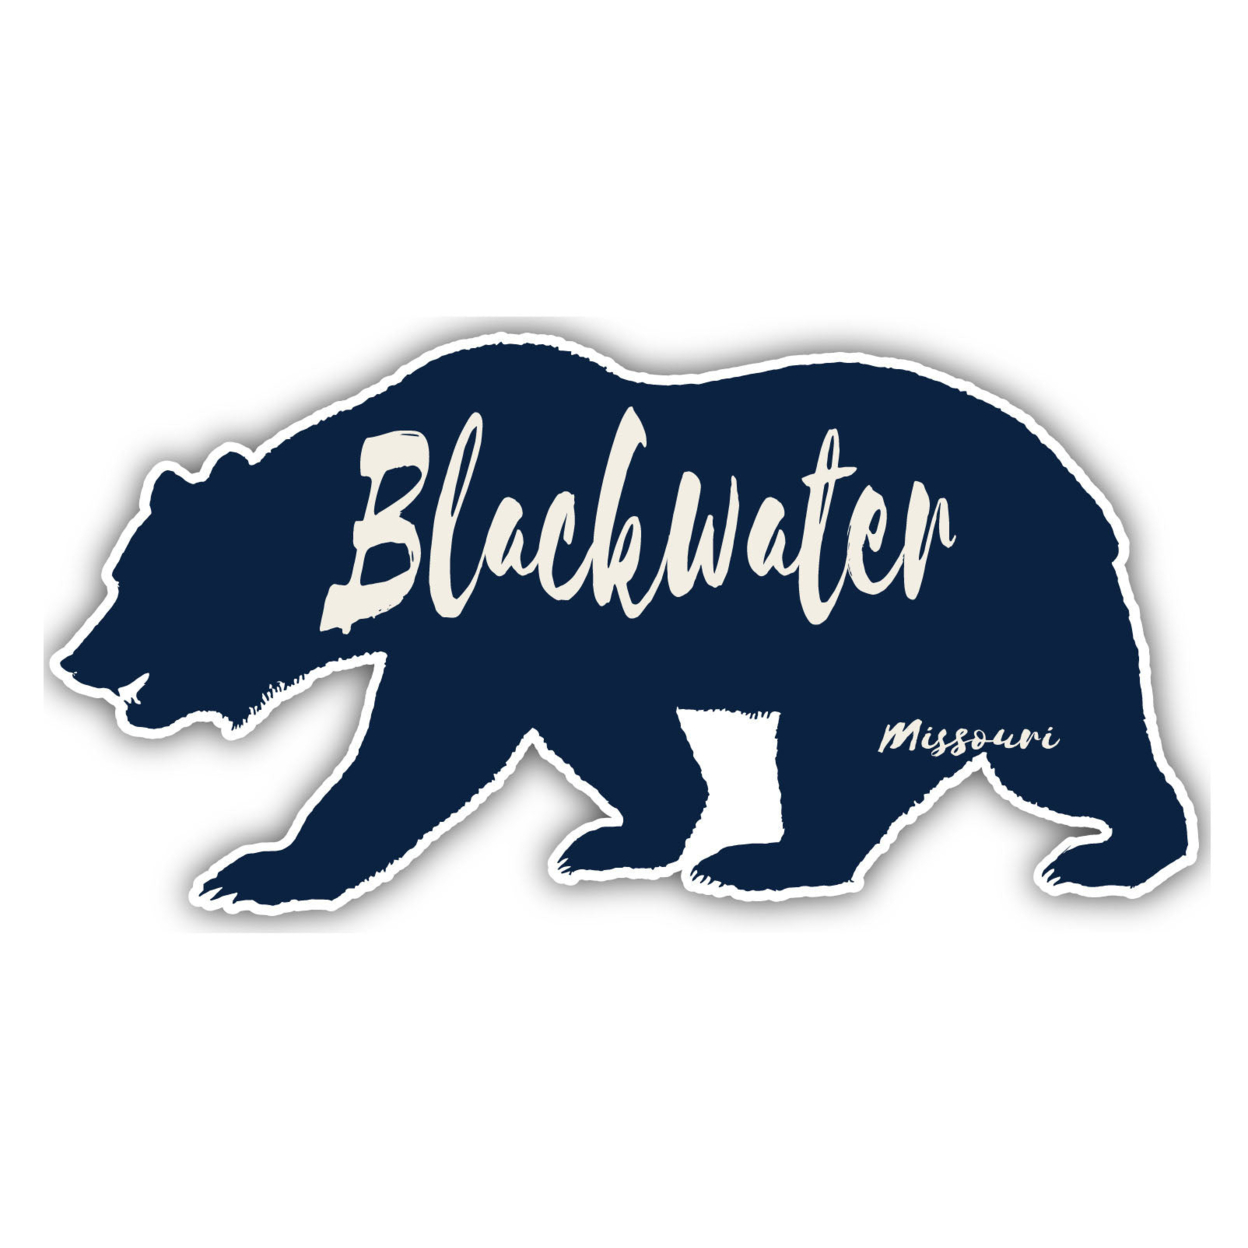 Blackwater Missouri Souvenir Decorative Stickers (Choose Theme And Size) - Single Unit, 8-Inch, Bear